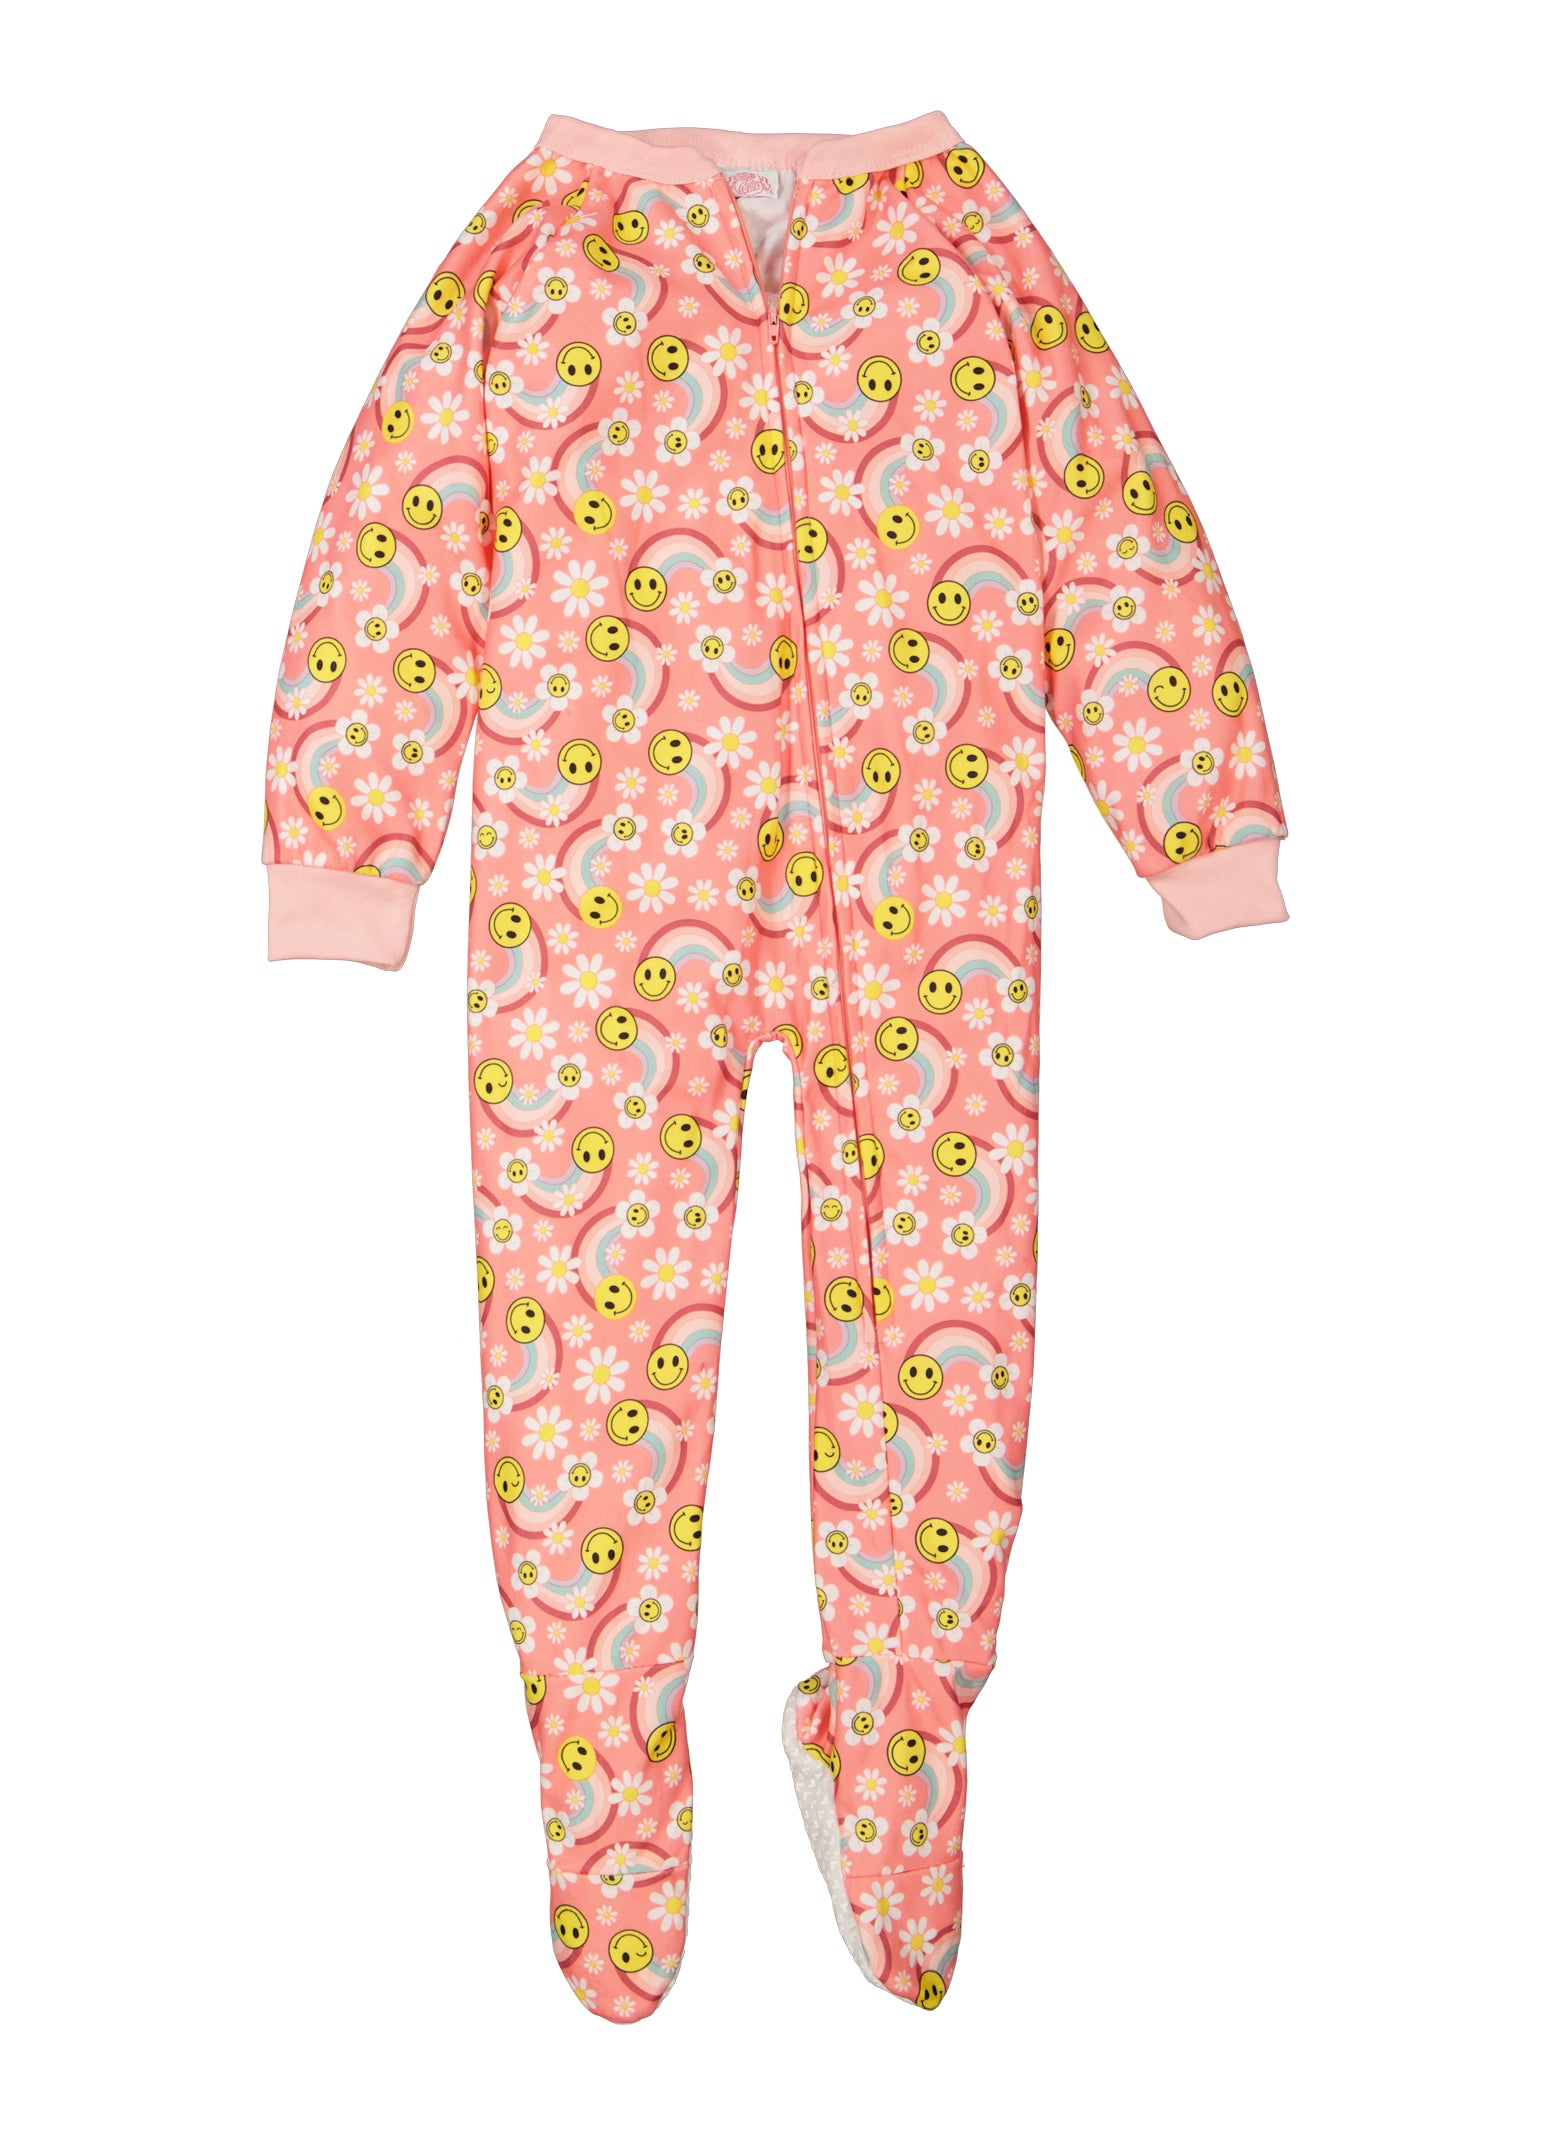 Little Girls Fleece Footed Pajamas, Orange, Size 4